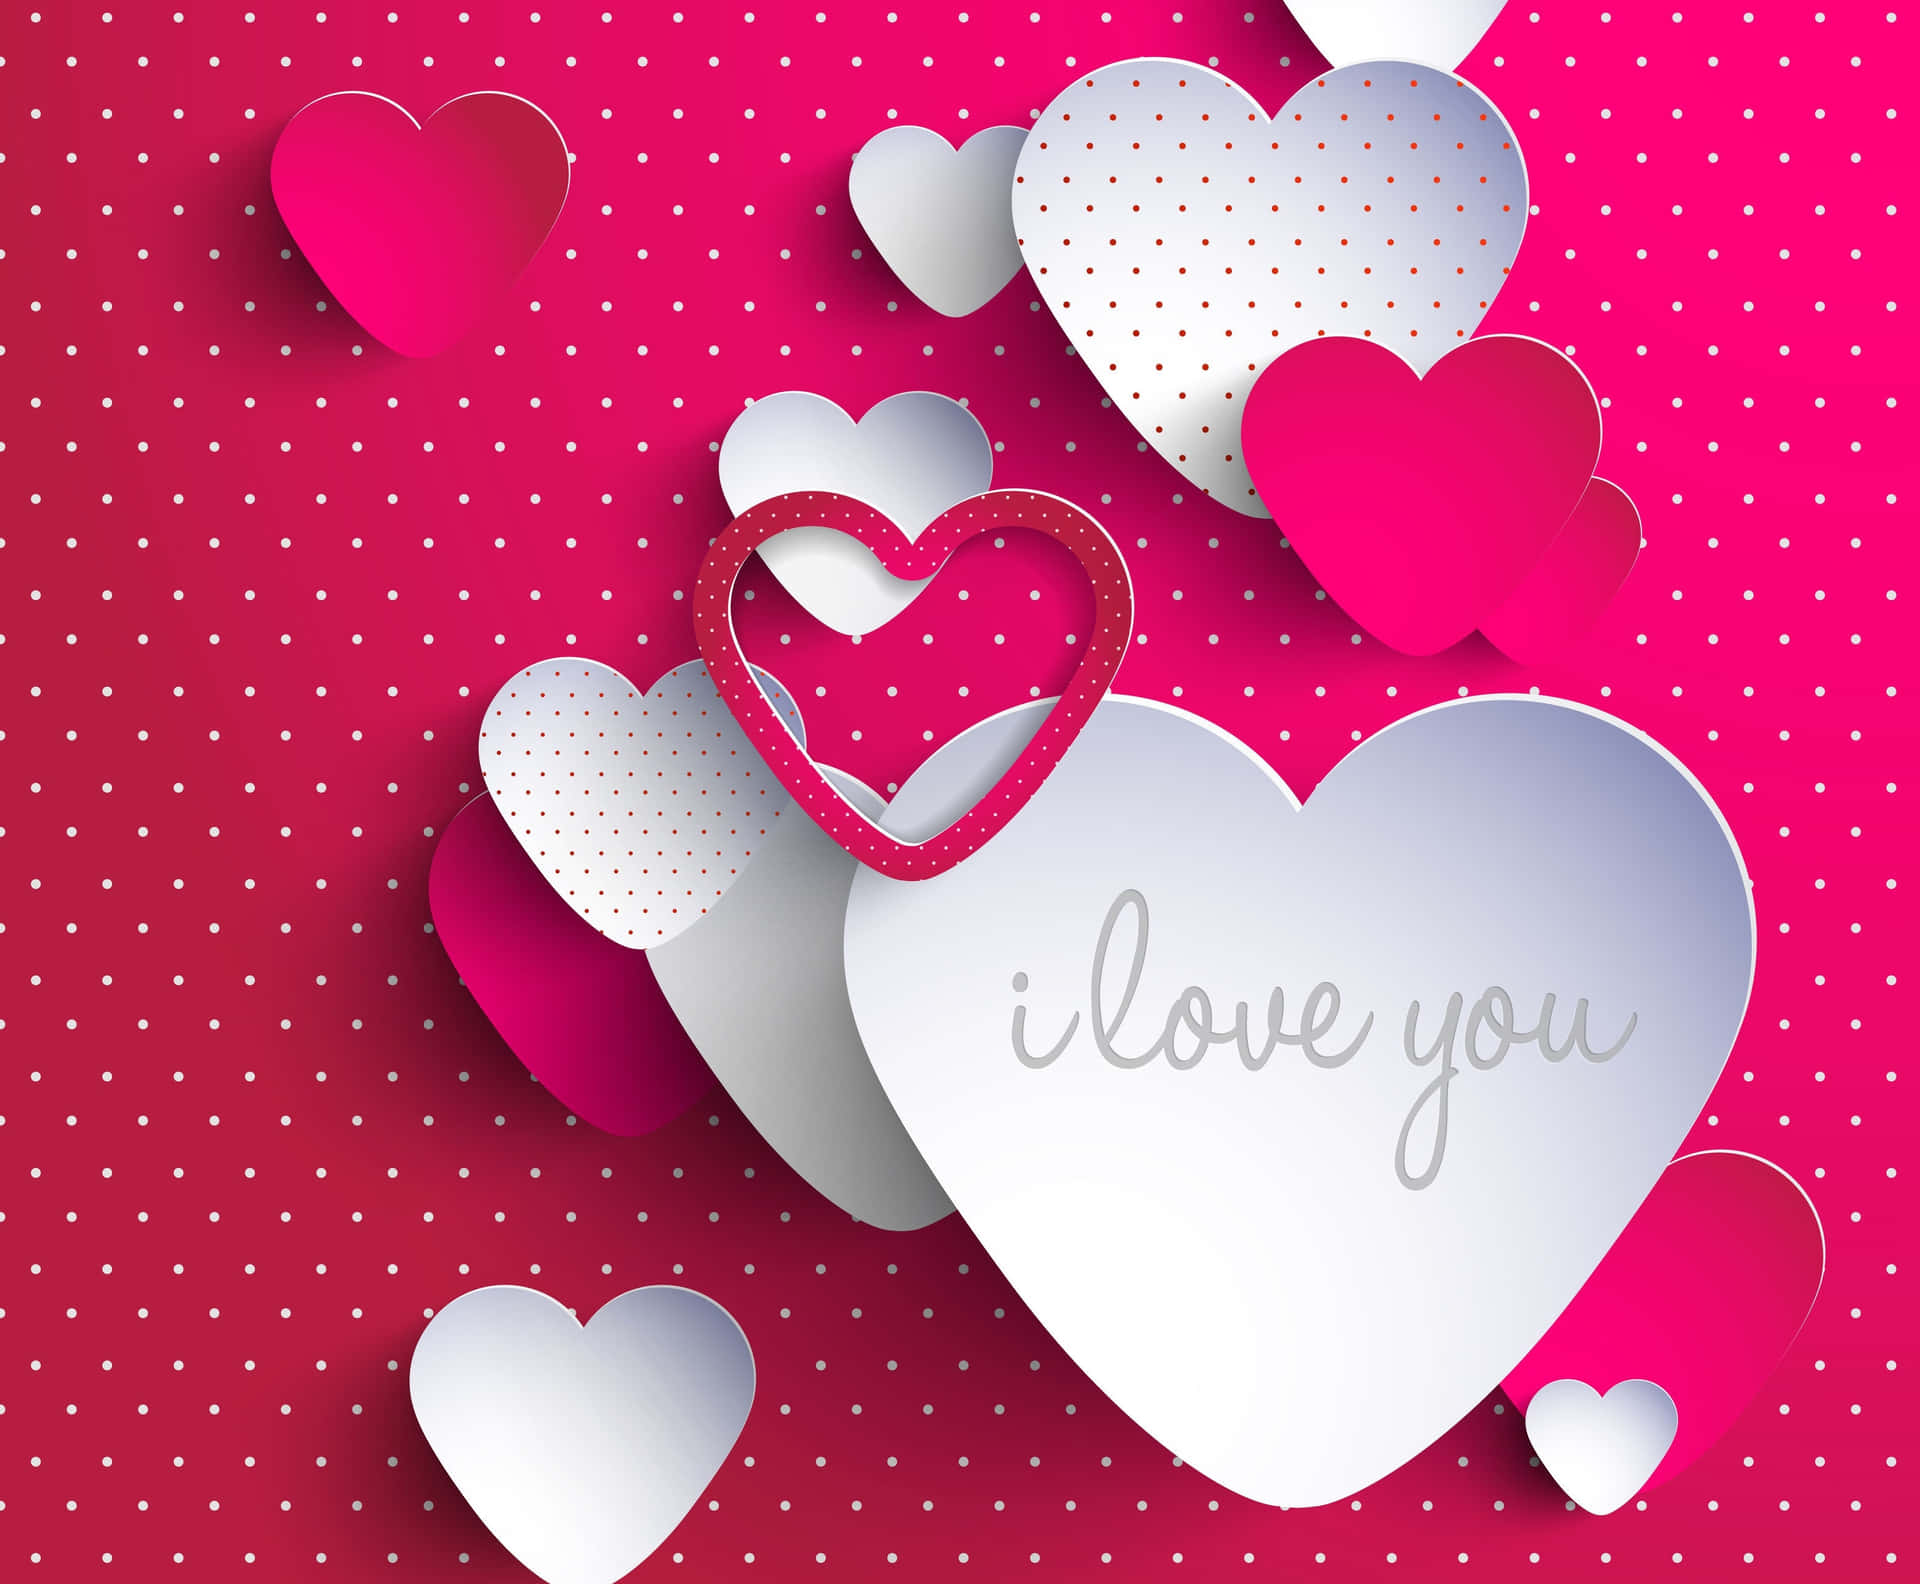 love heart wallpaper hd for desktop